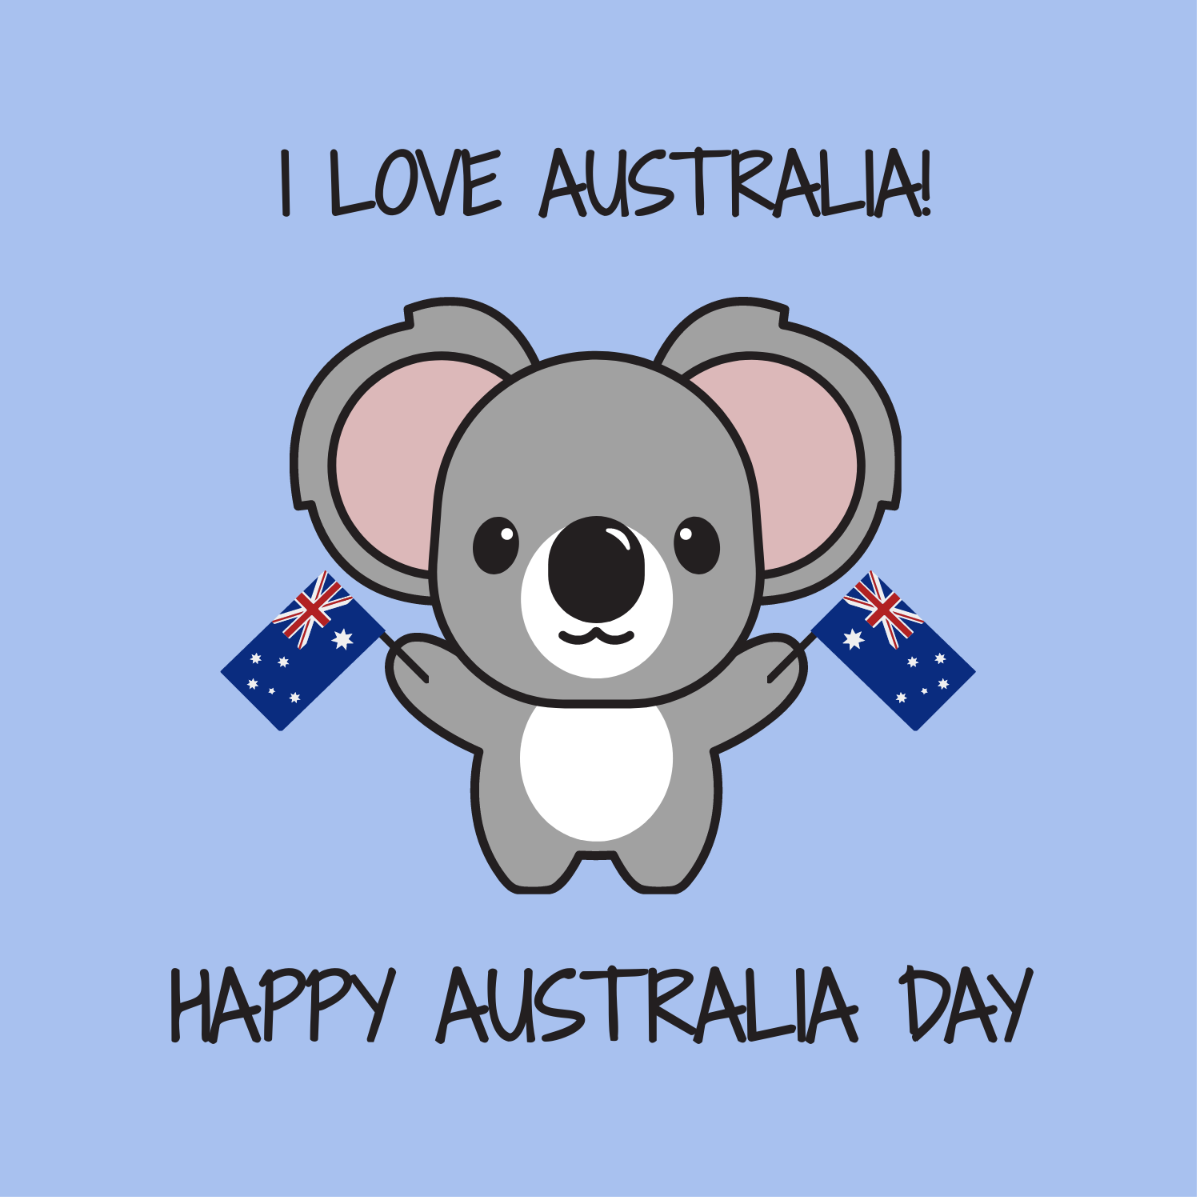 Australia Day Wishes Vector